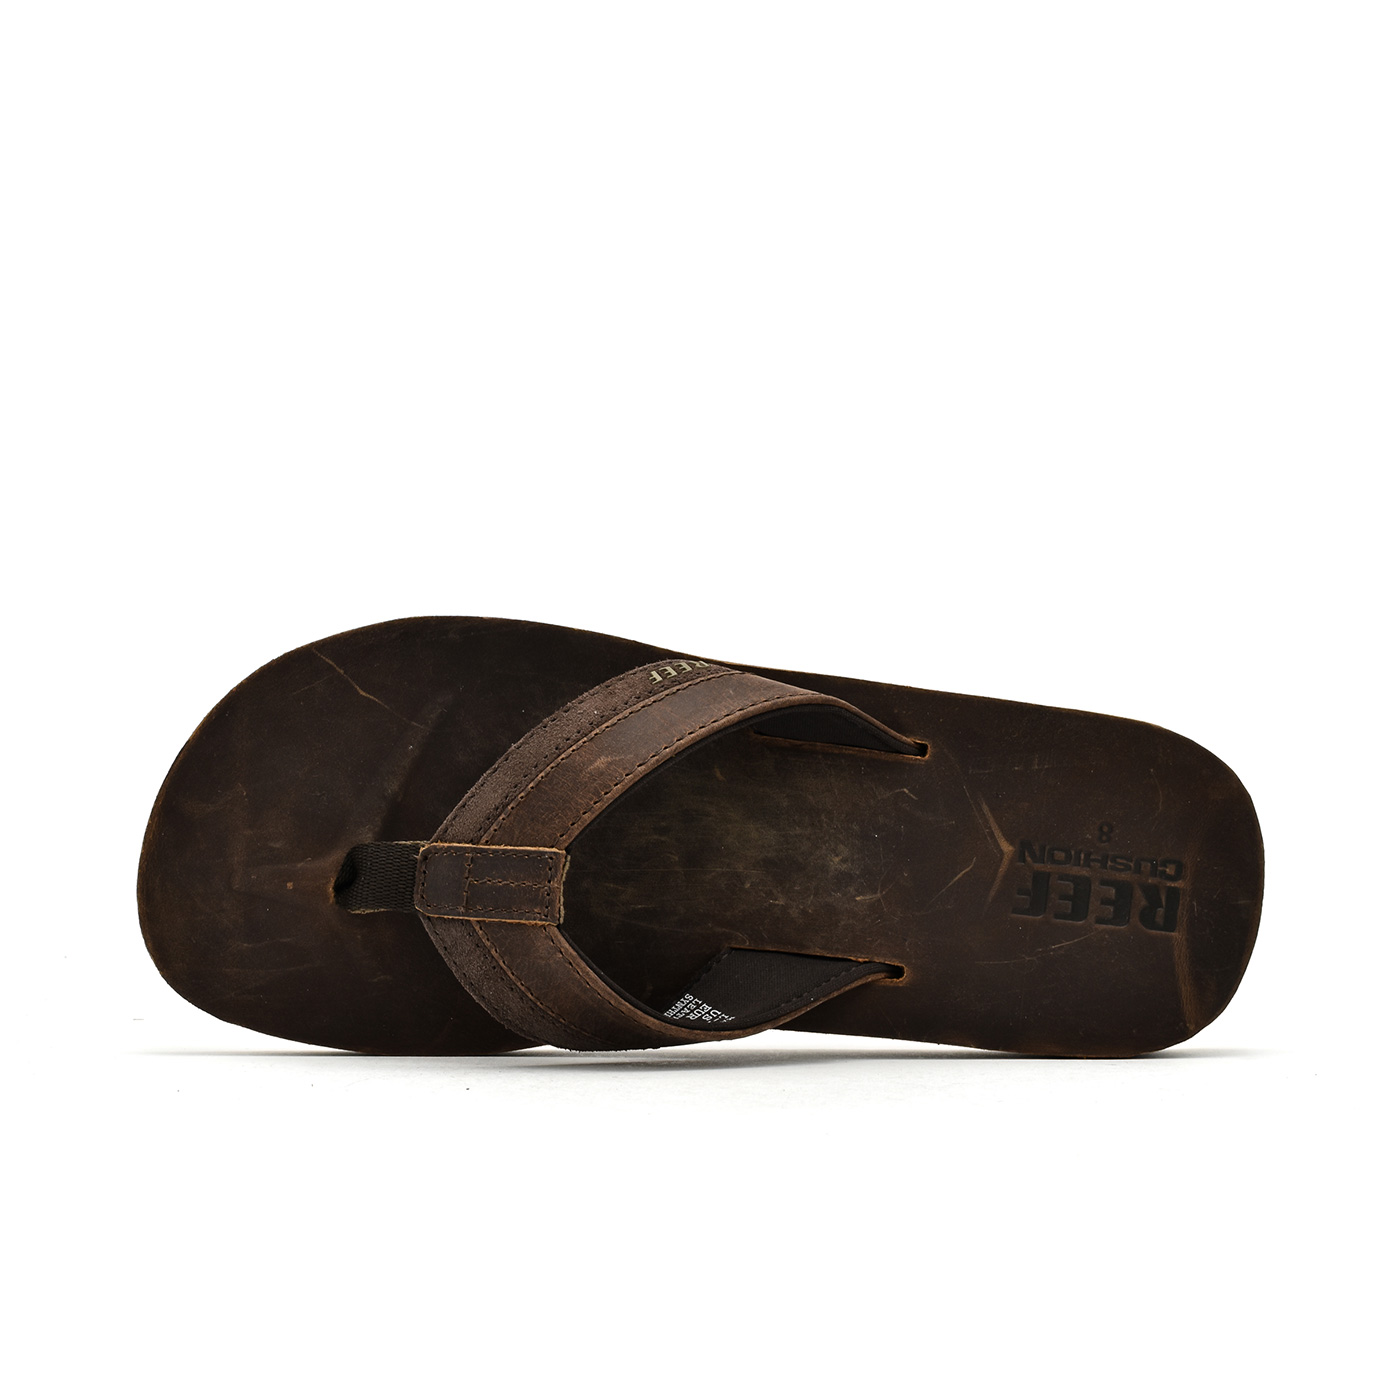 Leather Cntrd Cushion gama Sandals